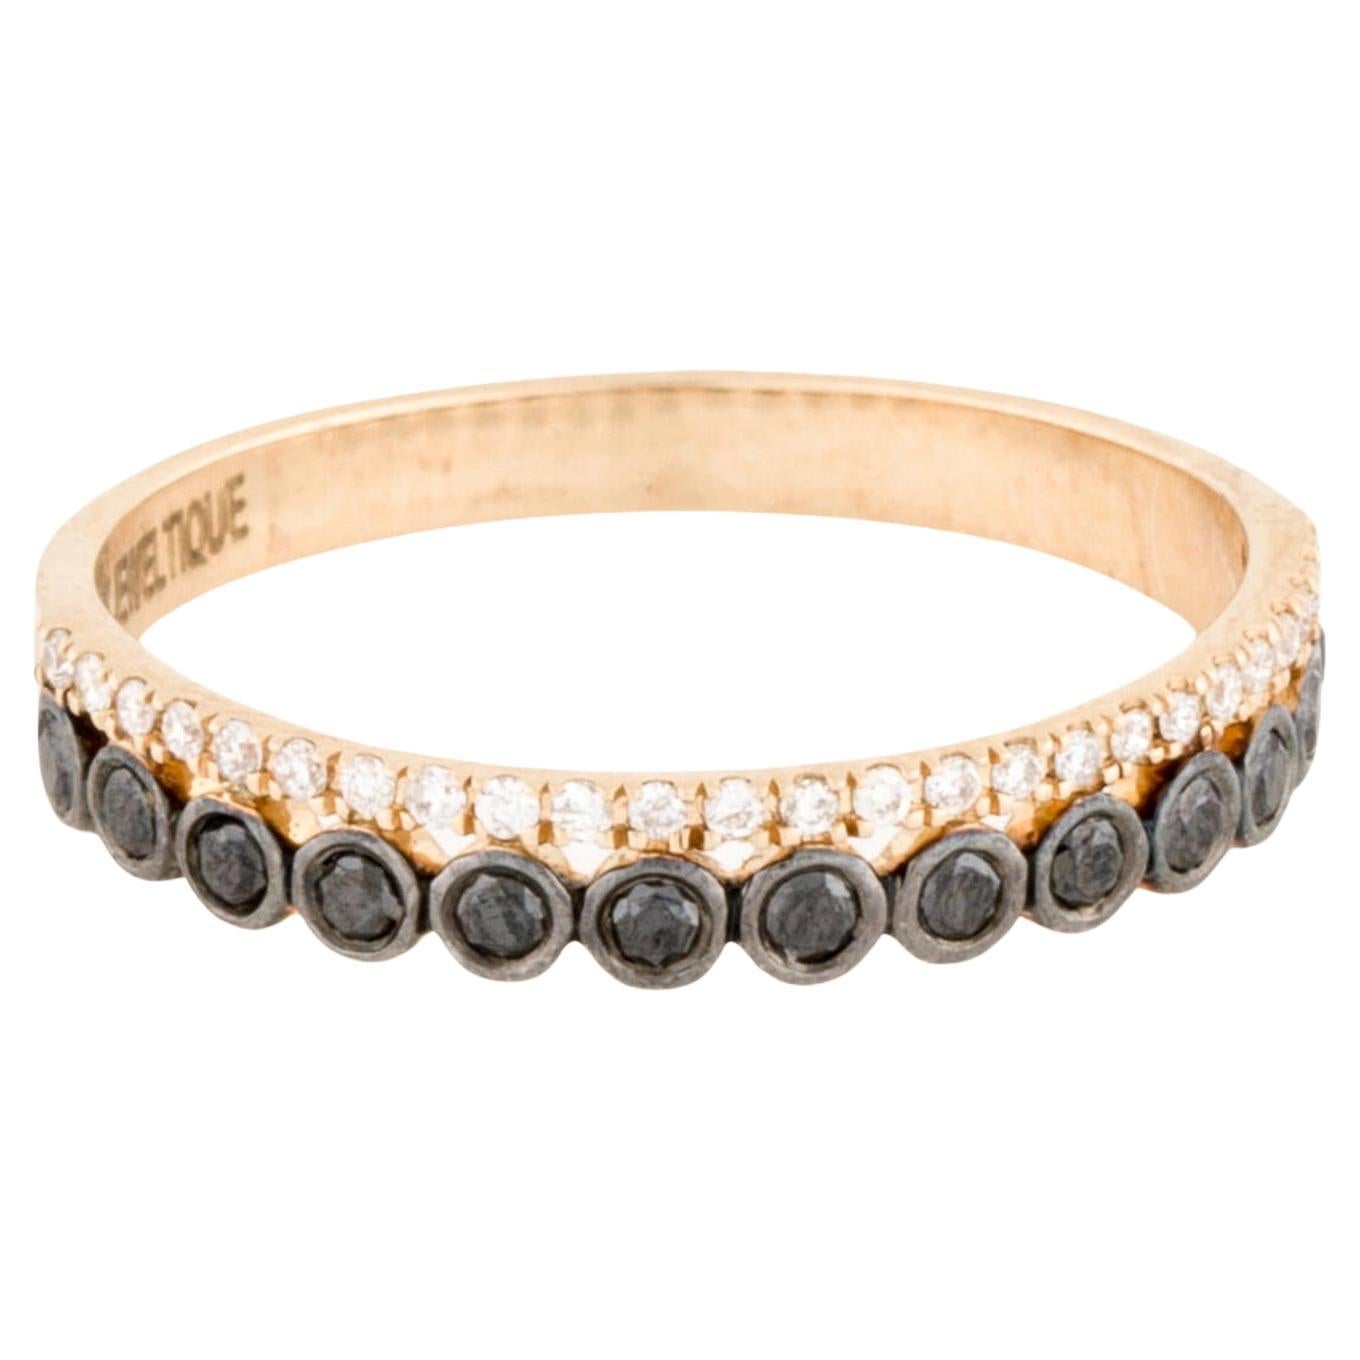 Stunning 14K Diamond Band Ring - Size 6.75 - Luxurious Gemstone Jewelry